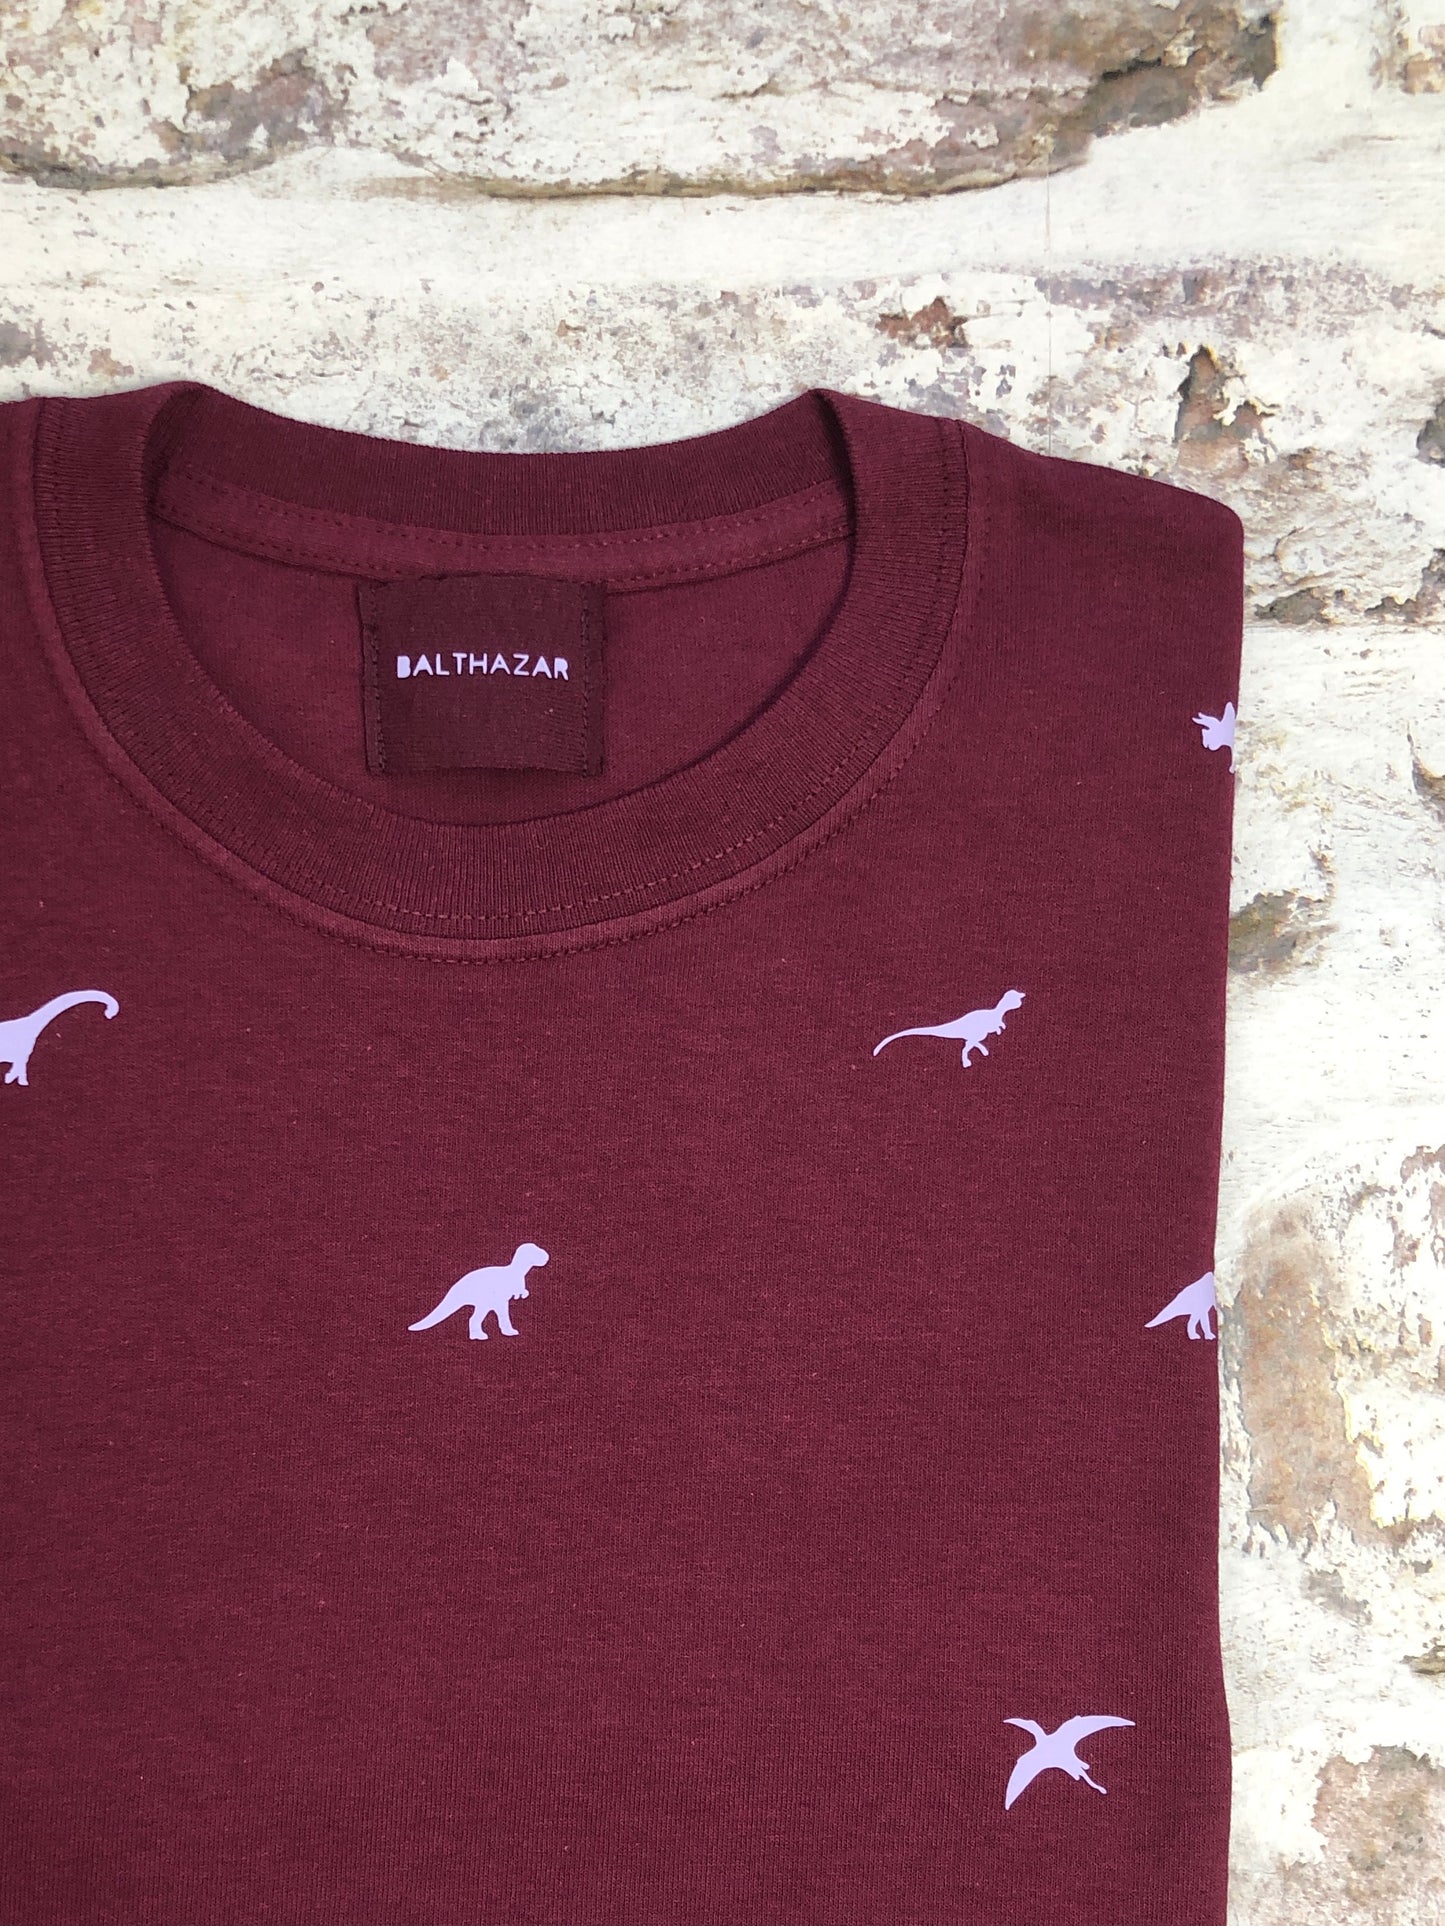 Miniature Dinosaur t-shirt